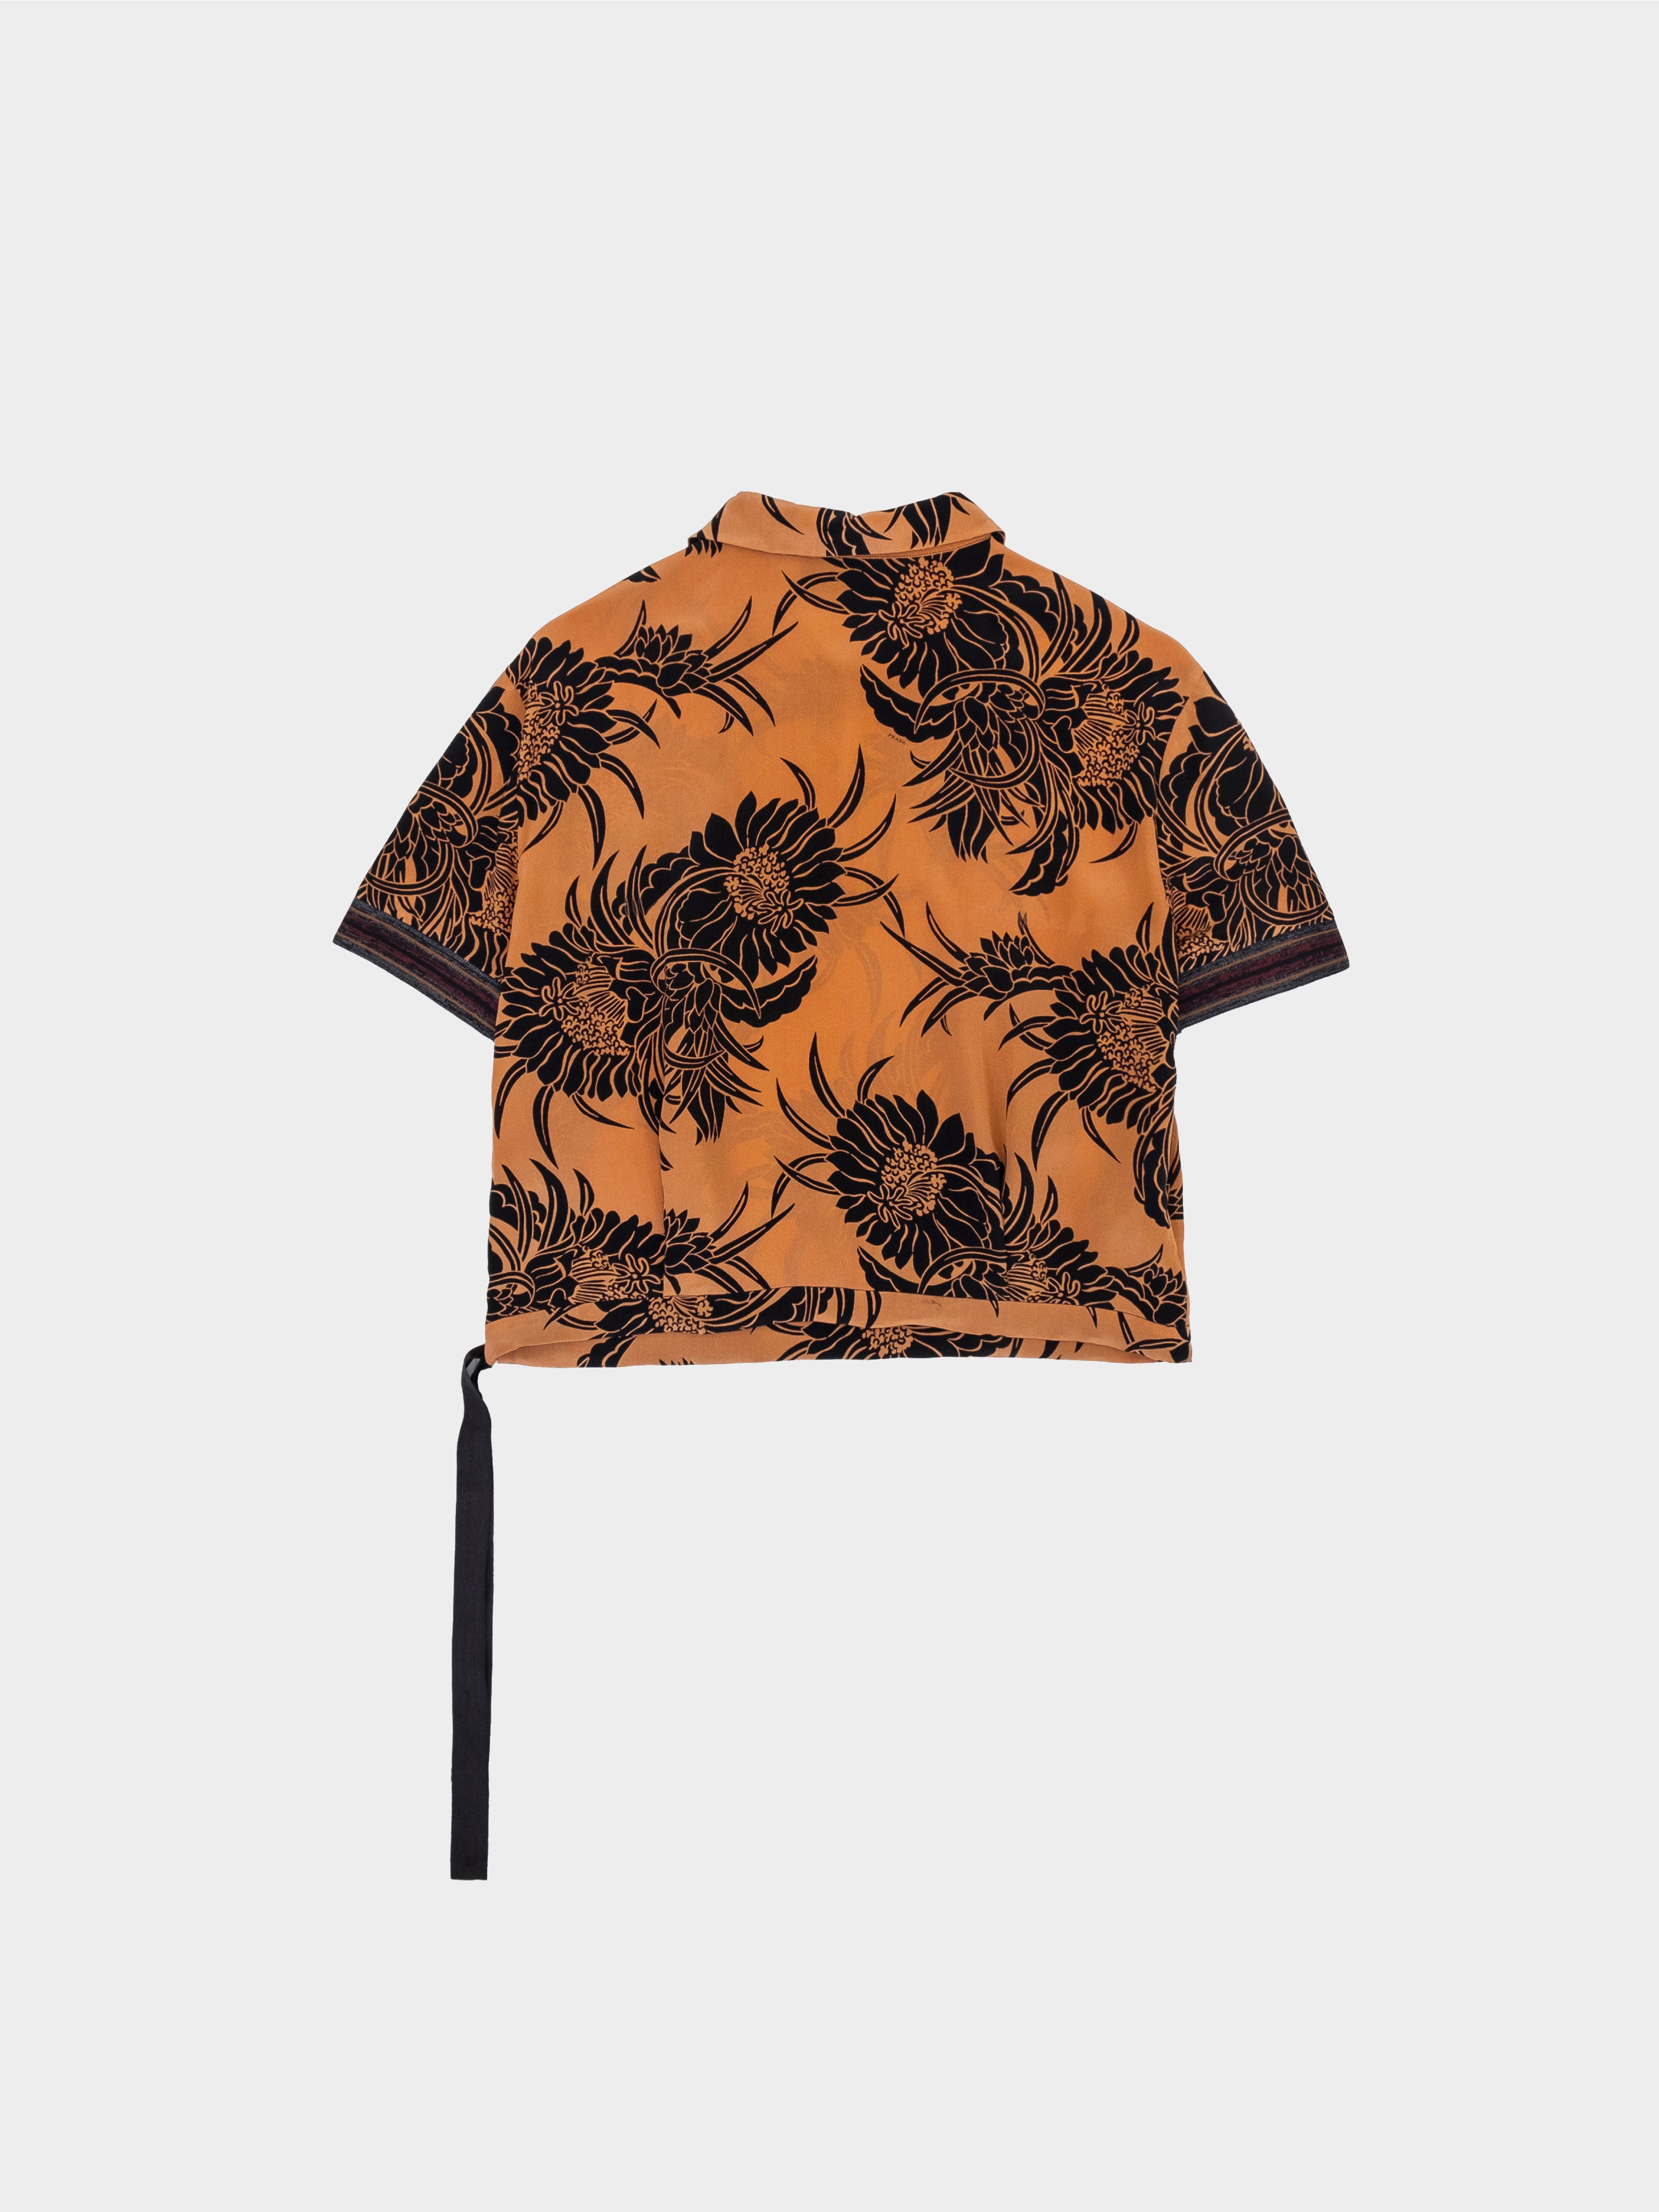 Prada SS 2013 Cropped Tropical Floral Shirt